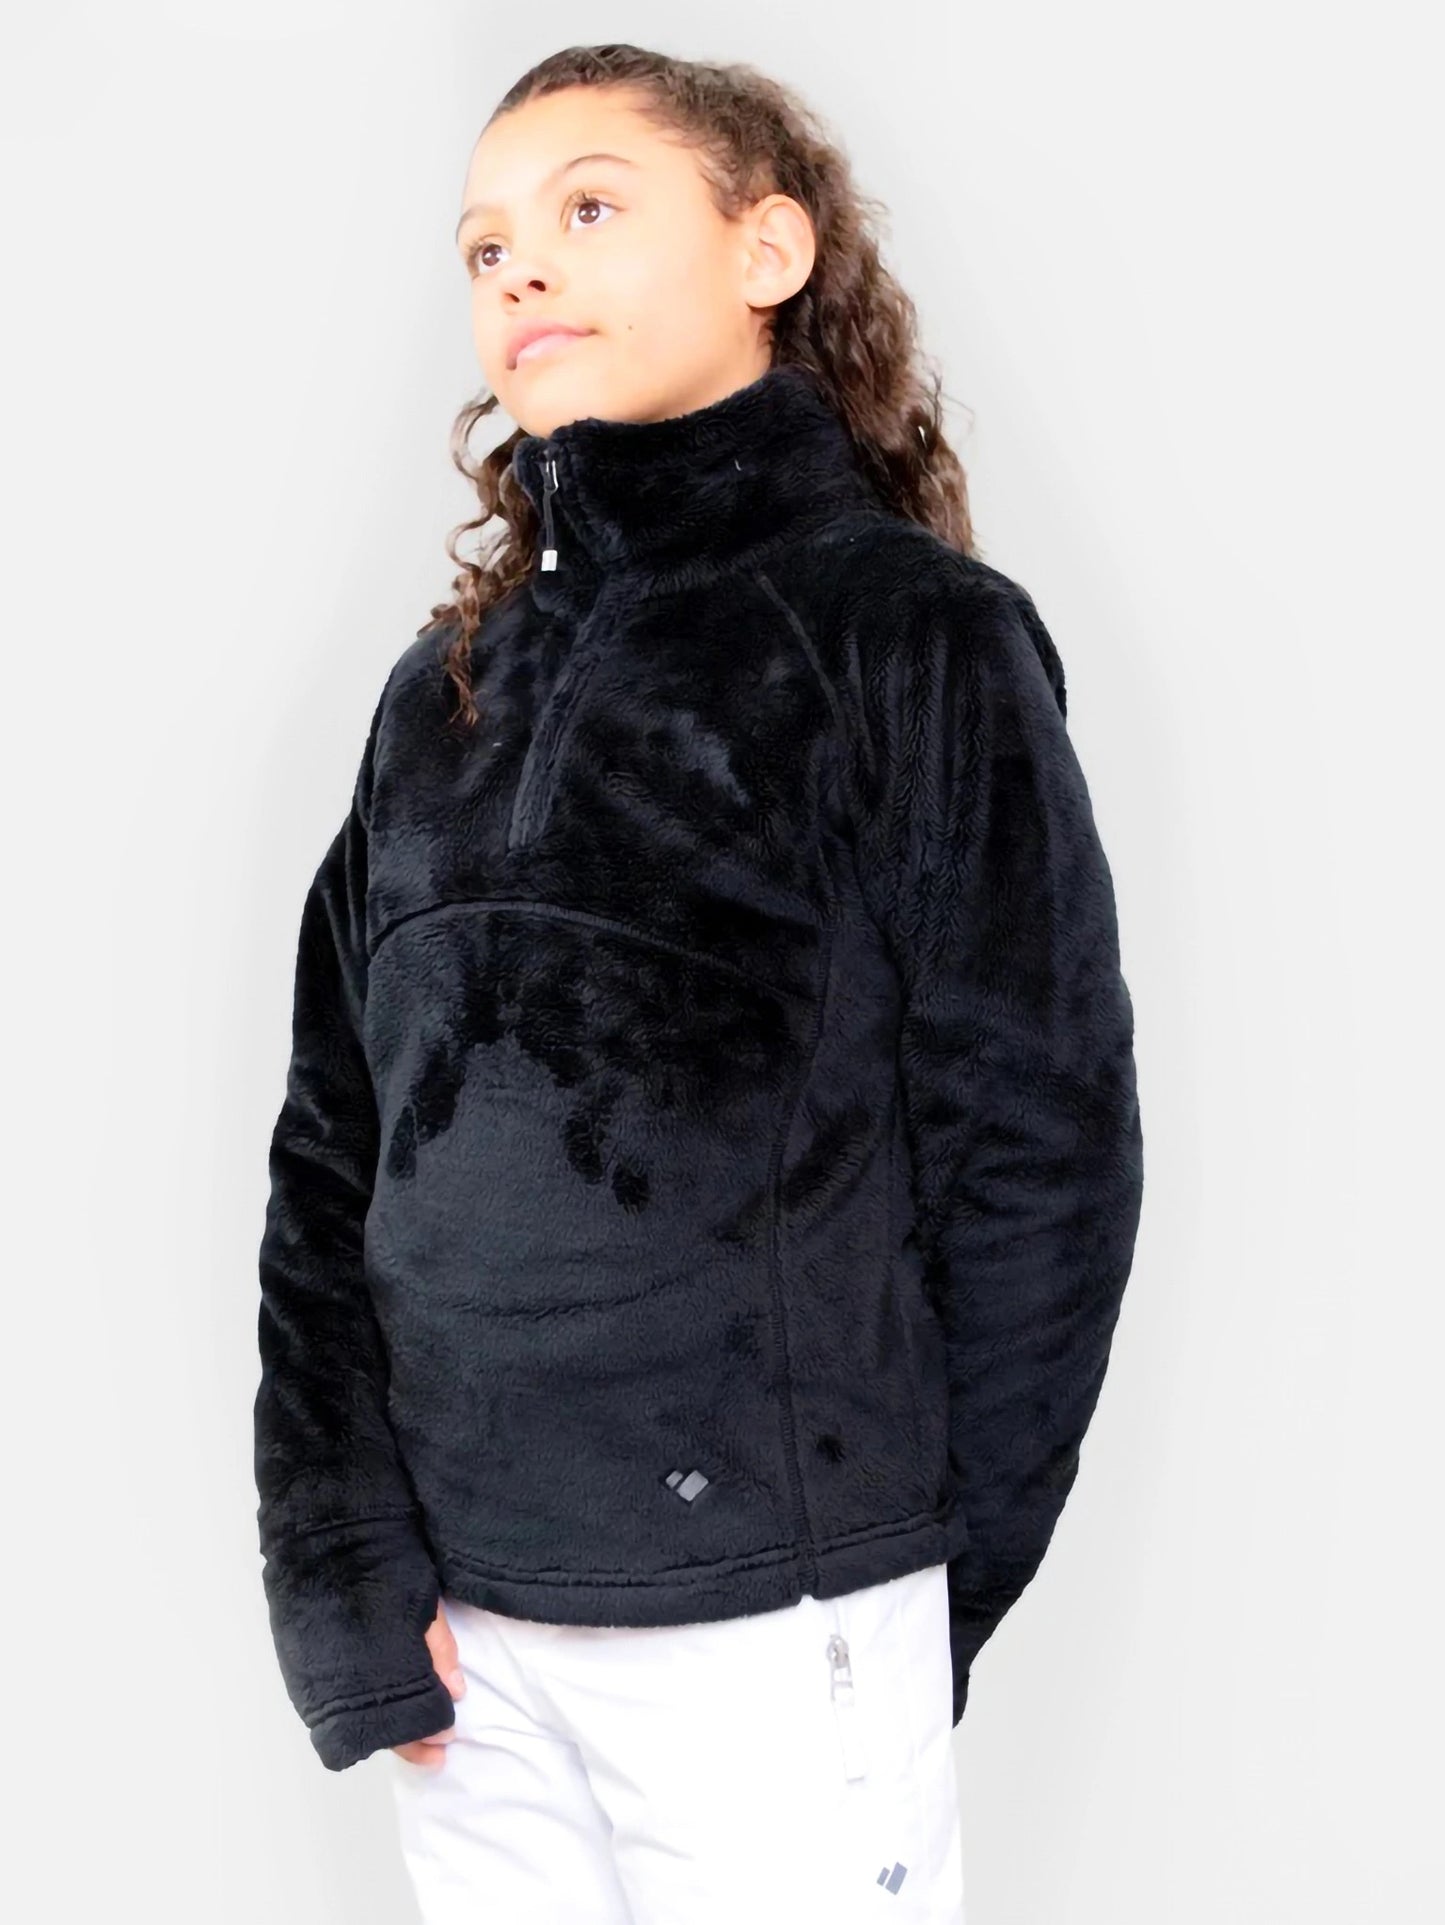 Obermeyer Teen Girls' Furry Fleece Top